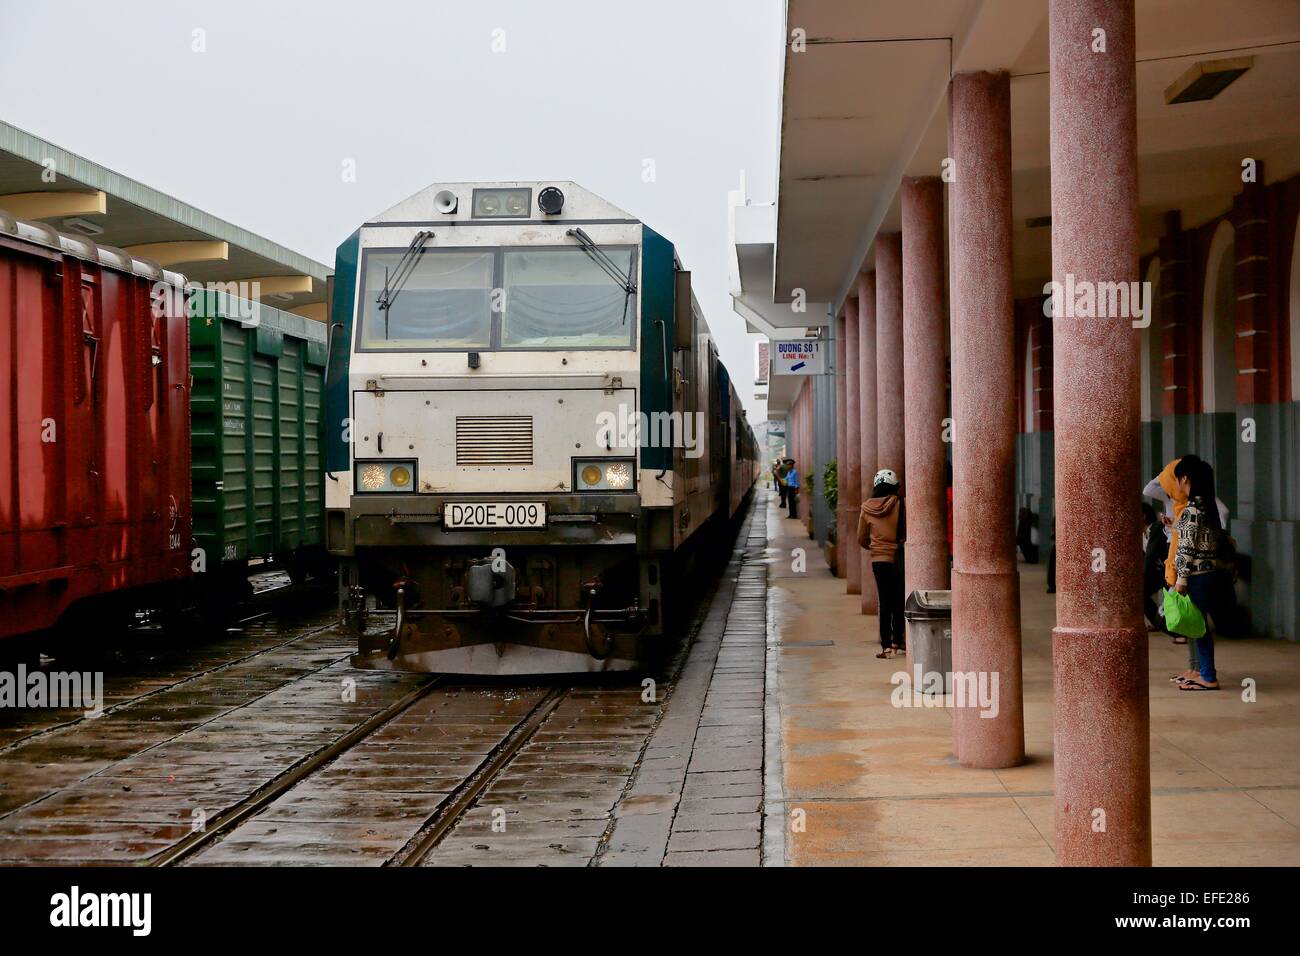 The Da Nang train arriving at Hue railway station, Vietnam Stock Photo